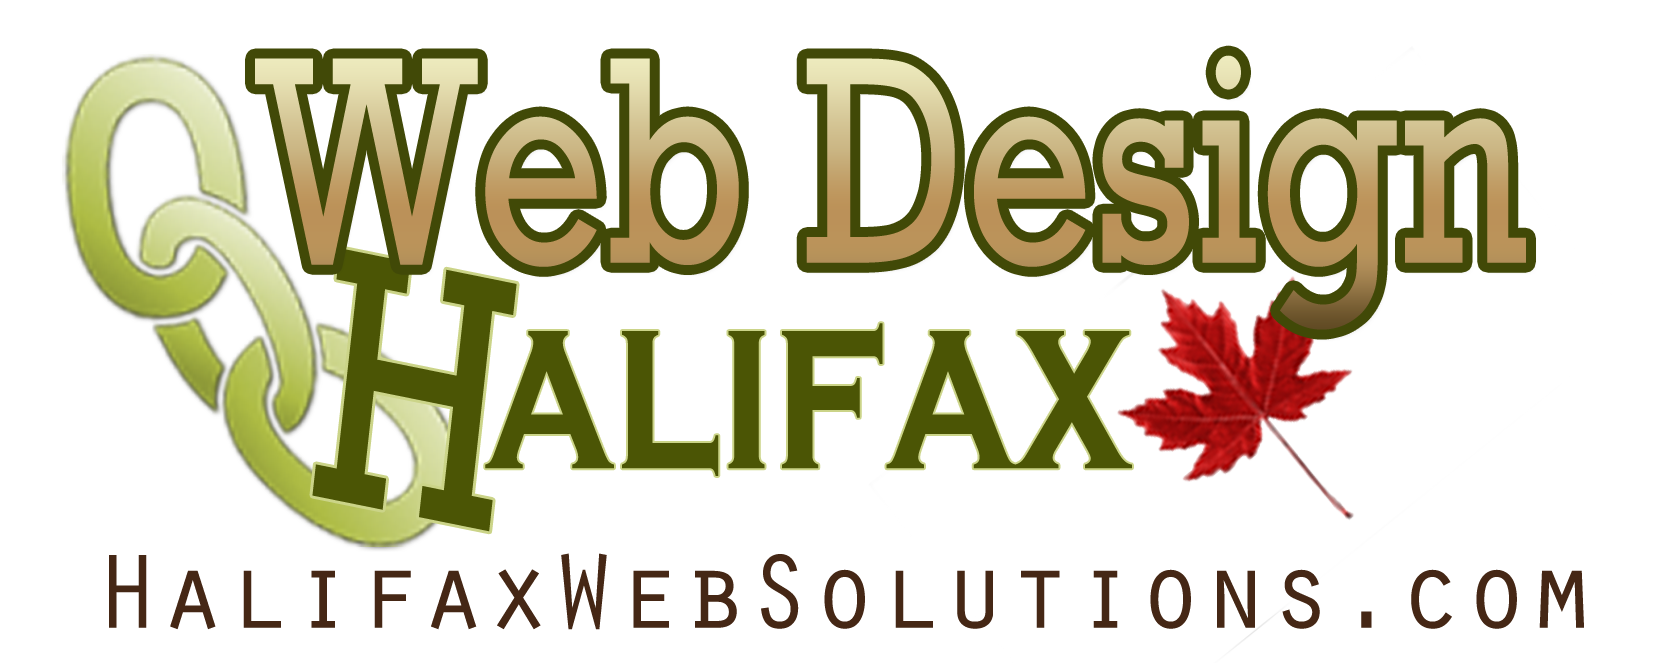 Halifax Web Design Solutions